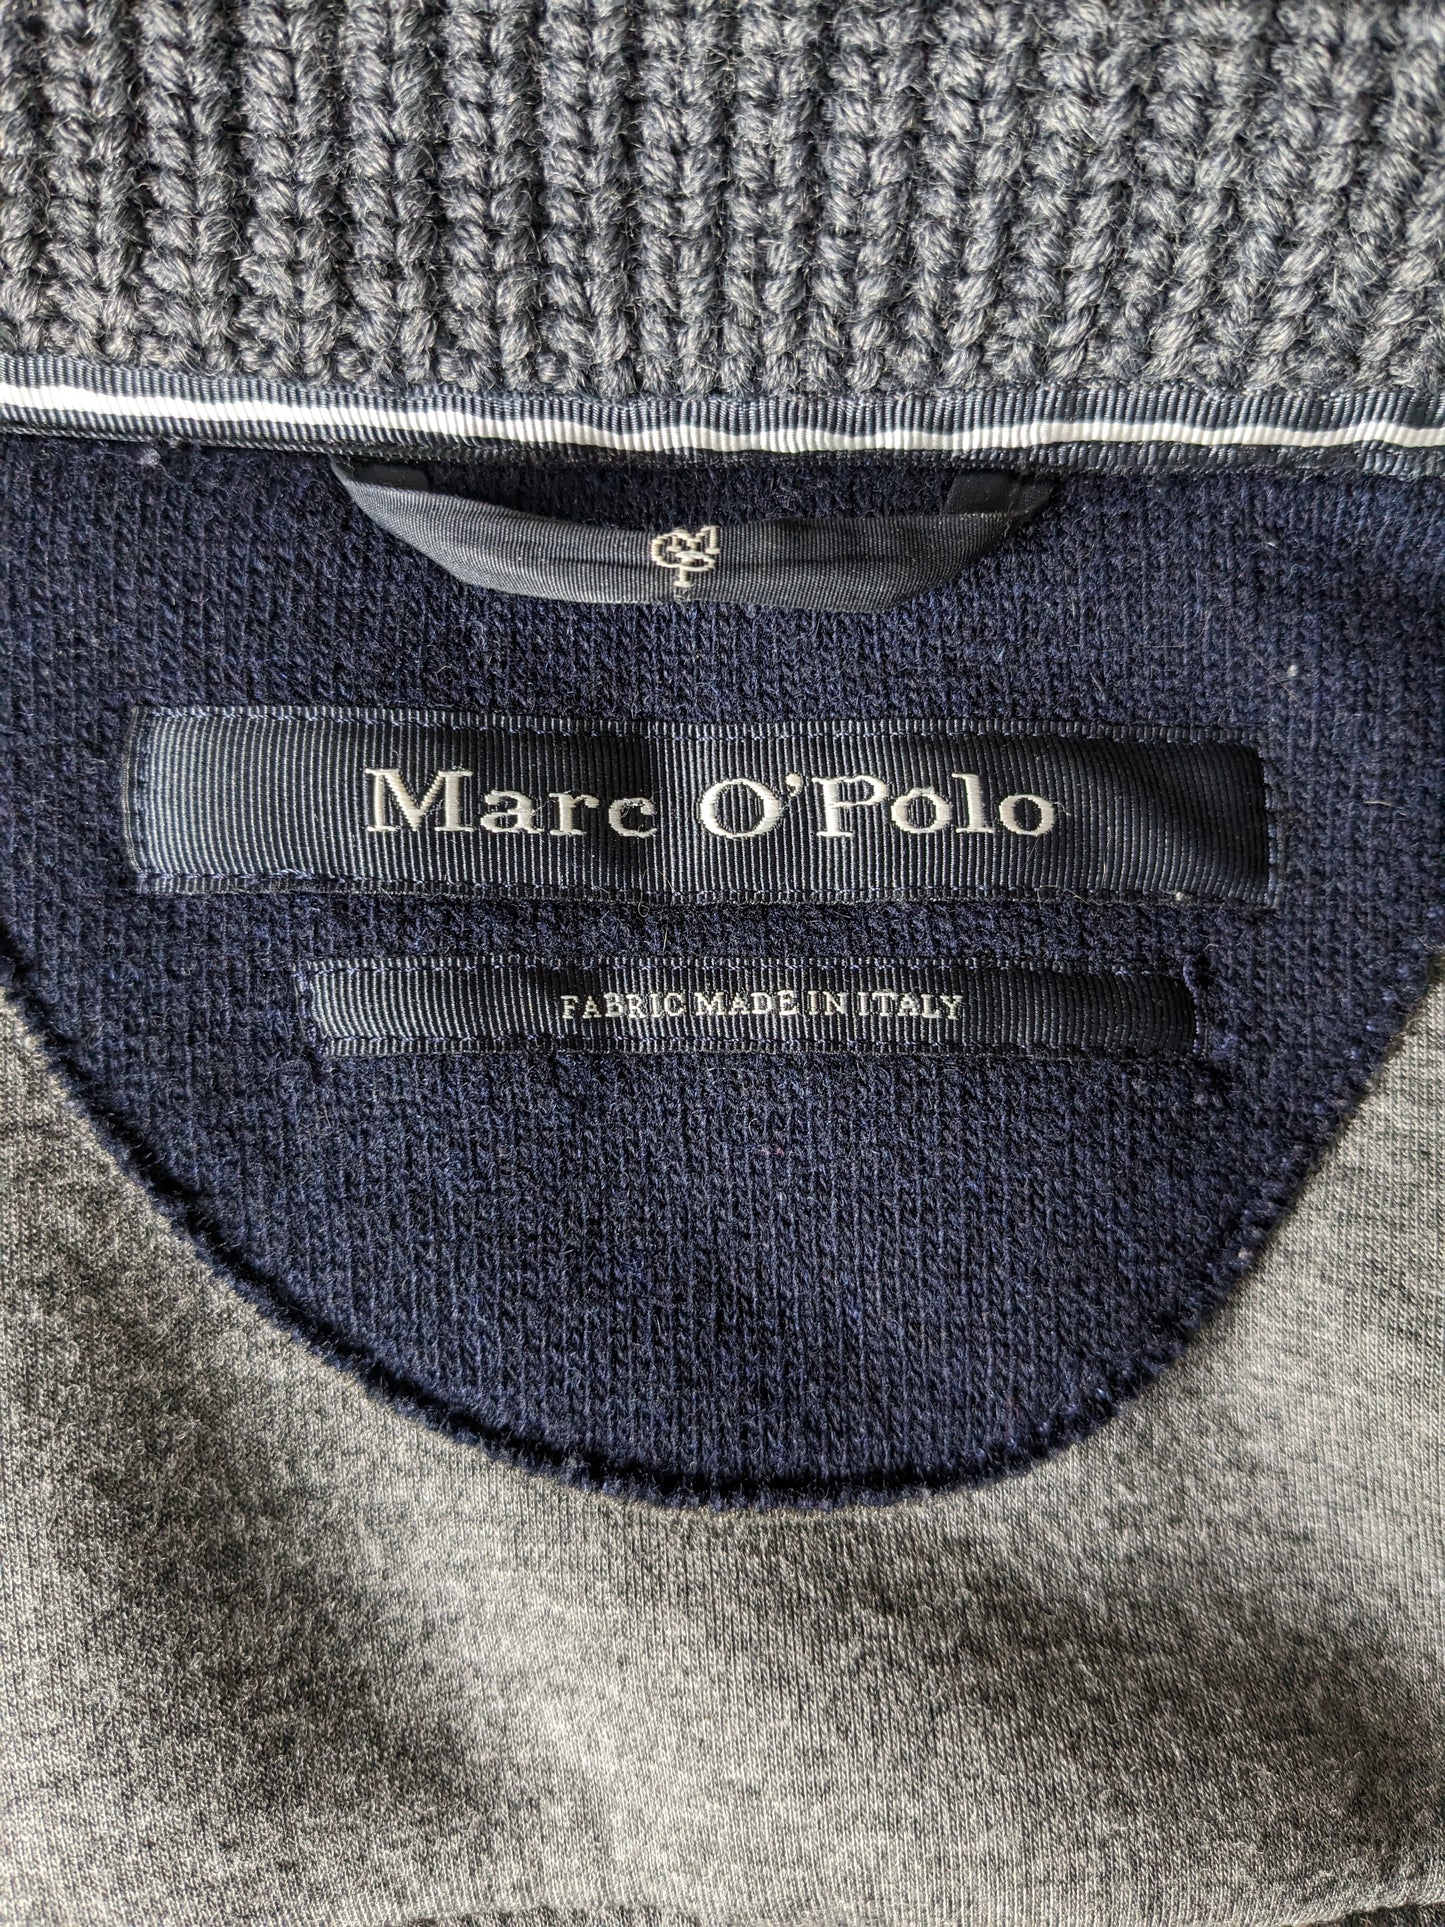 Marc O'Polo Wolle halbe Länge Jacke. Dunkelblau grau gefärbt. Größe M.